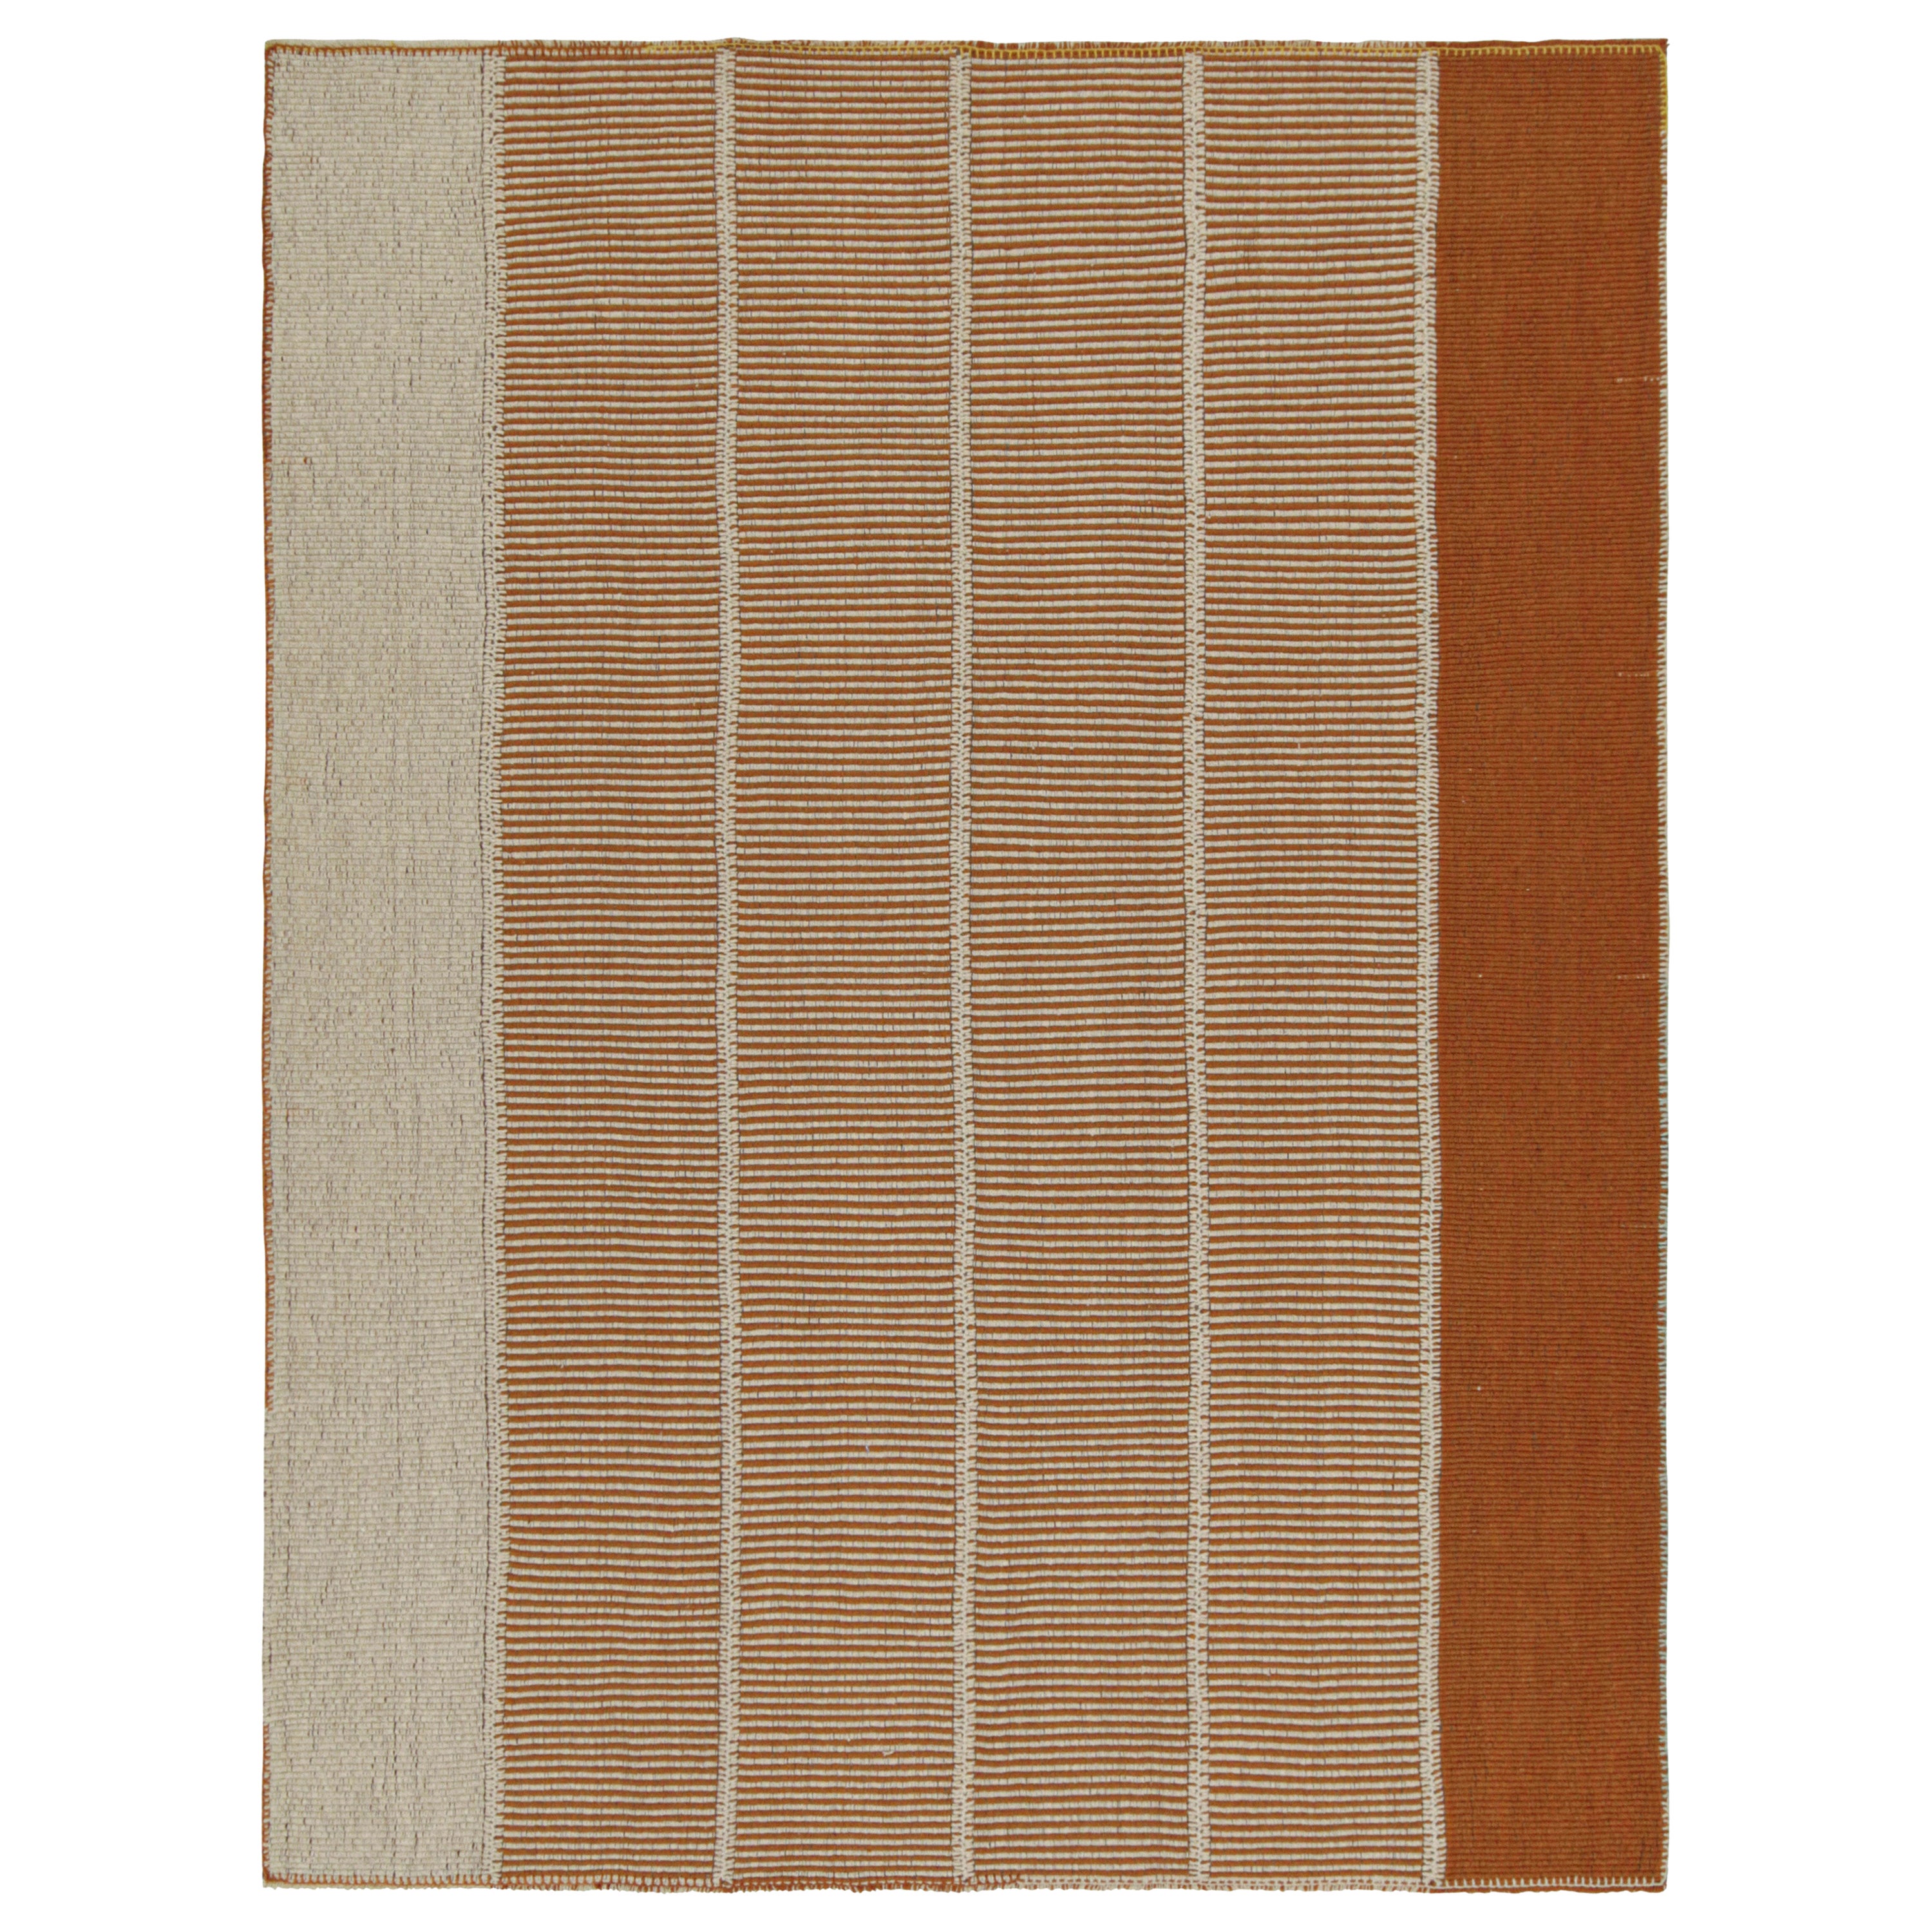 Rug & Kilim's Contemporary Kilim in Orange & Cream Stripes (Kilim contemporain à rayures orange et crème)